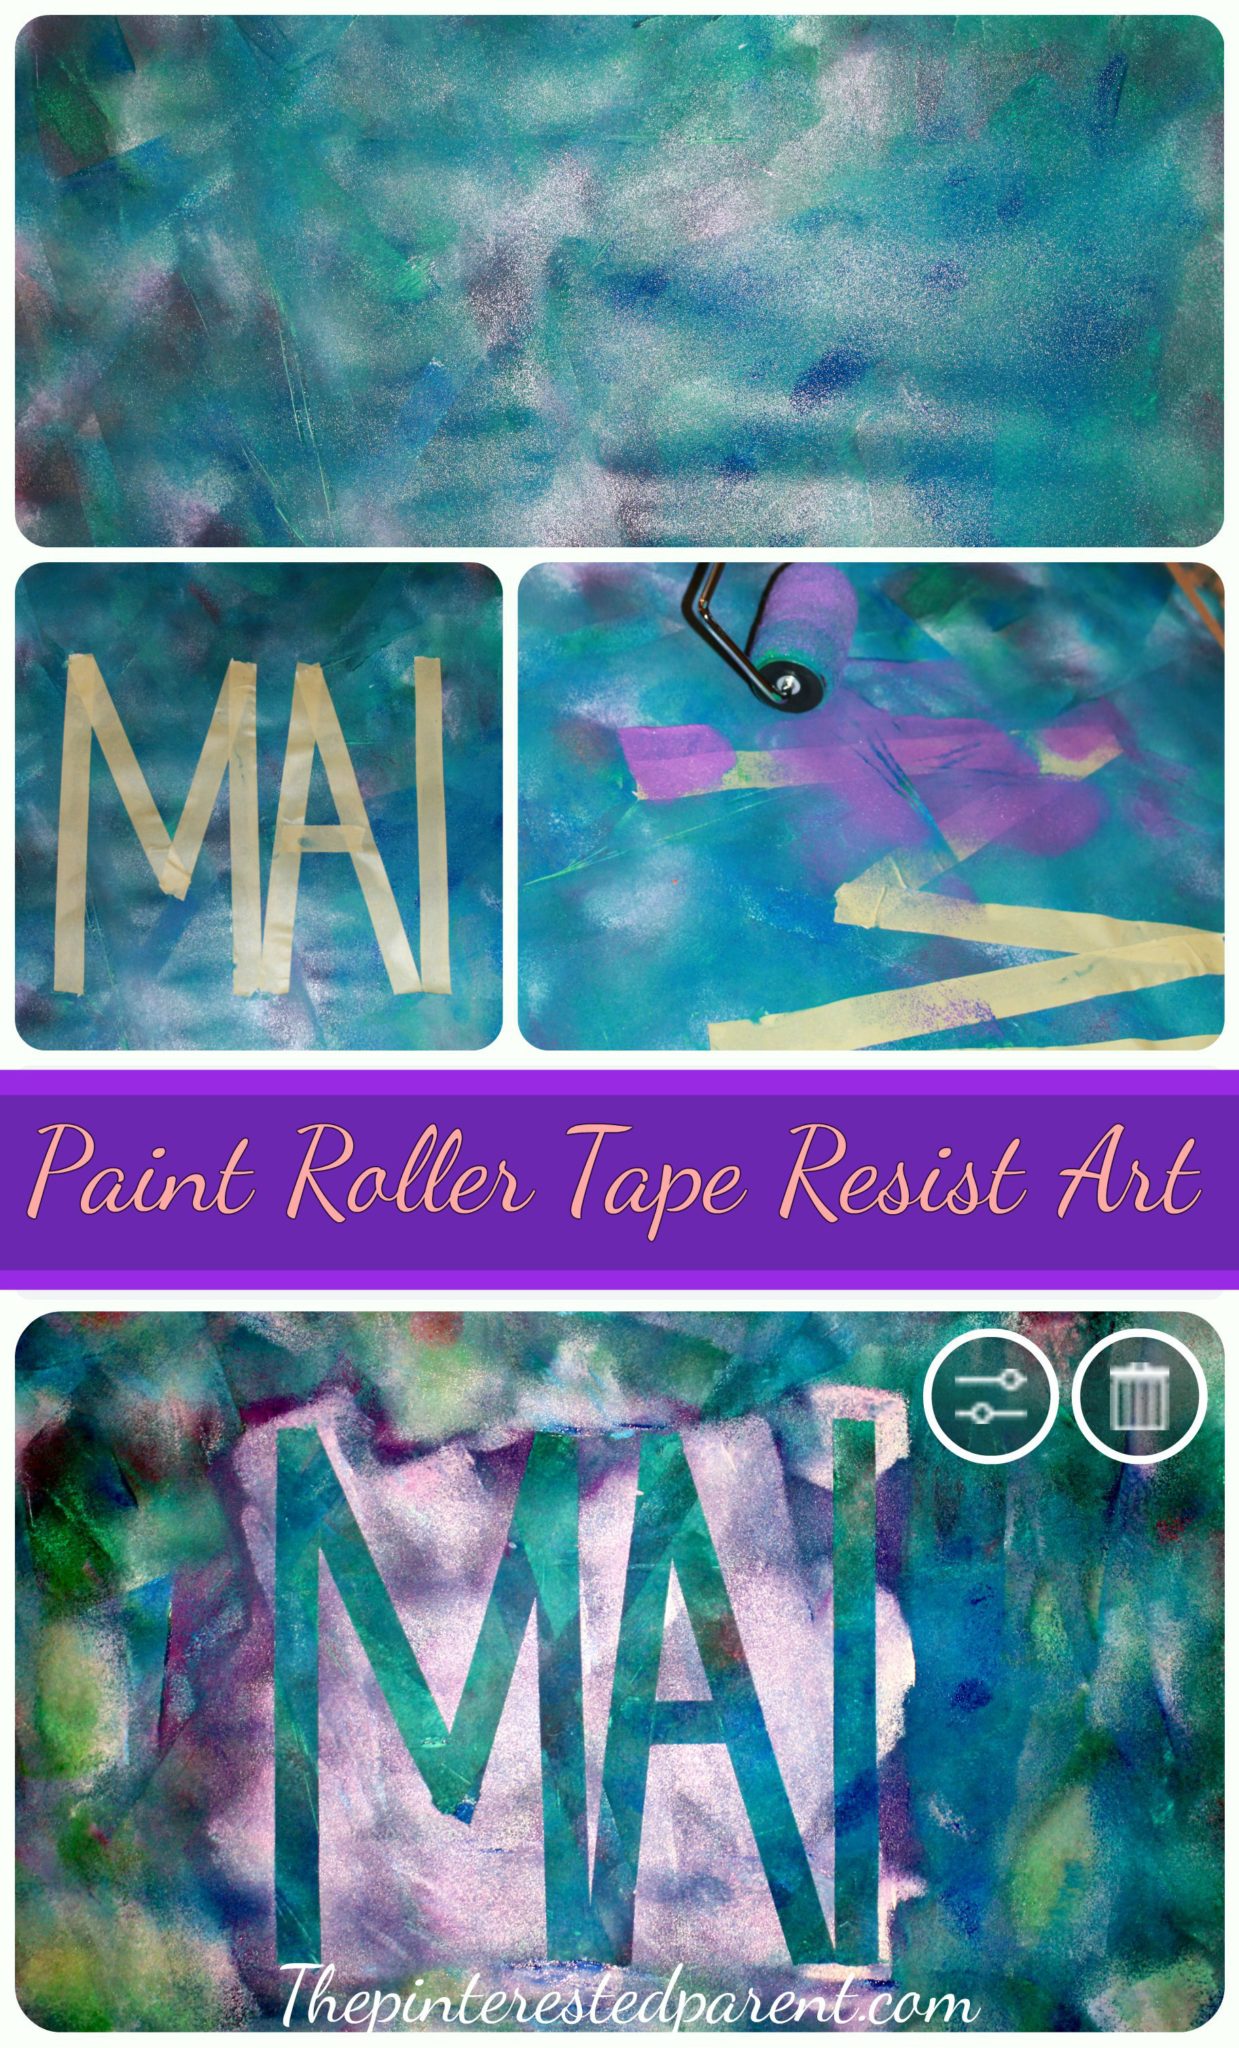 Paint Roller Tape Resist Art